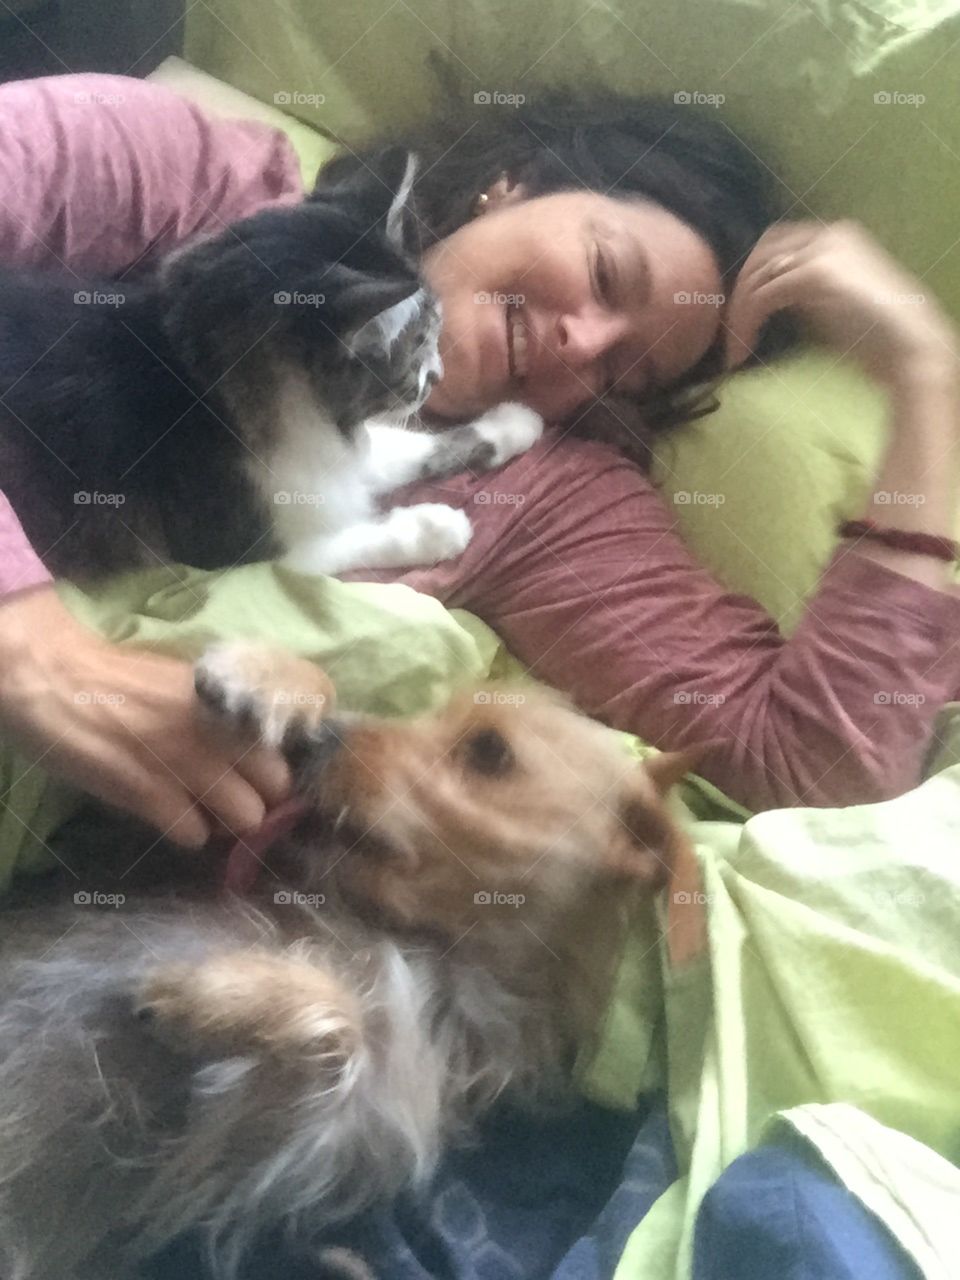 Cuddle buddies. Cat and dog cuddling with human 